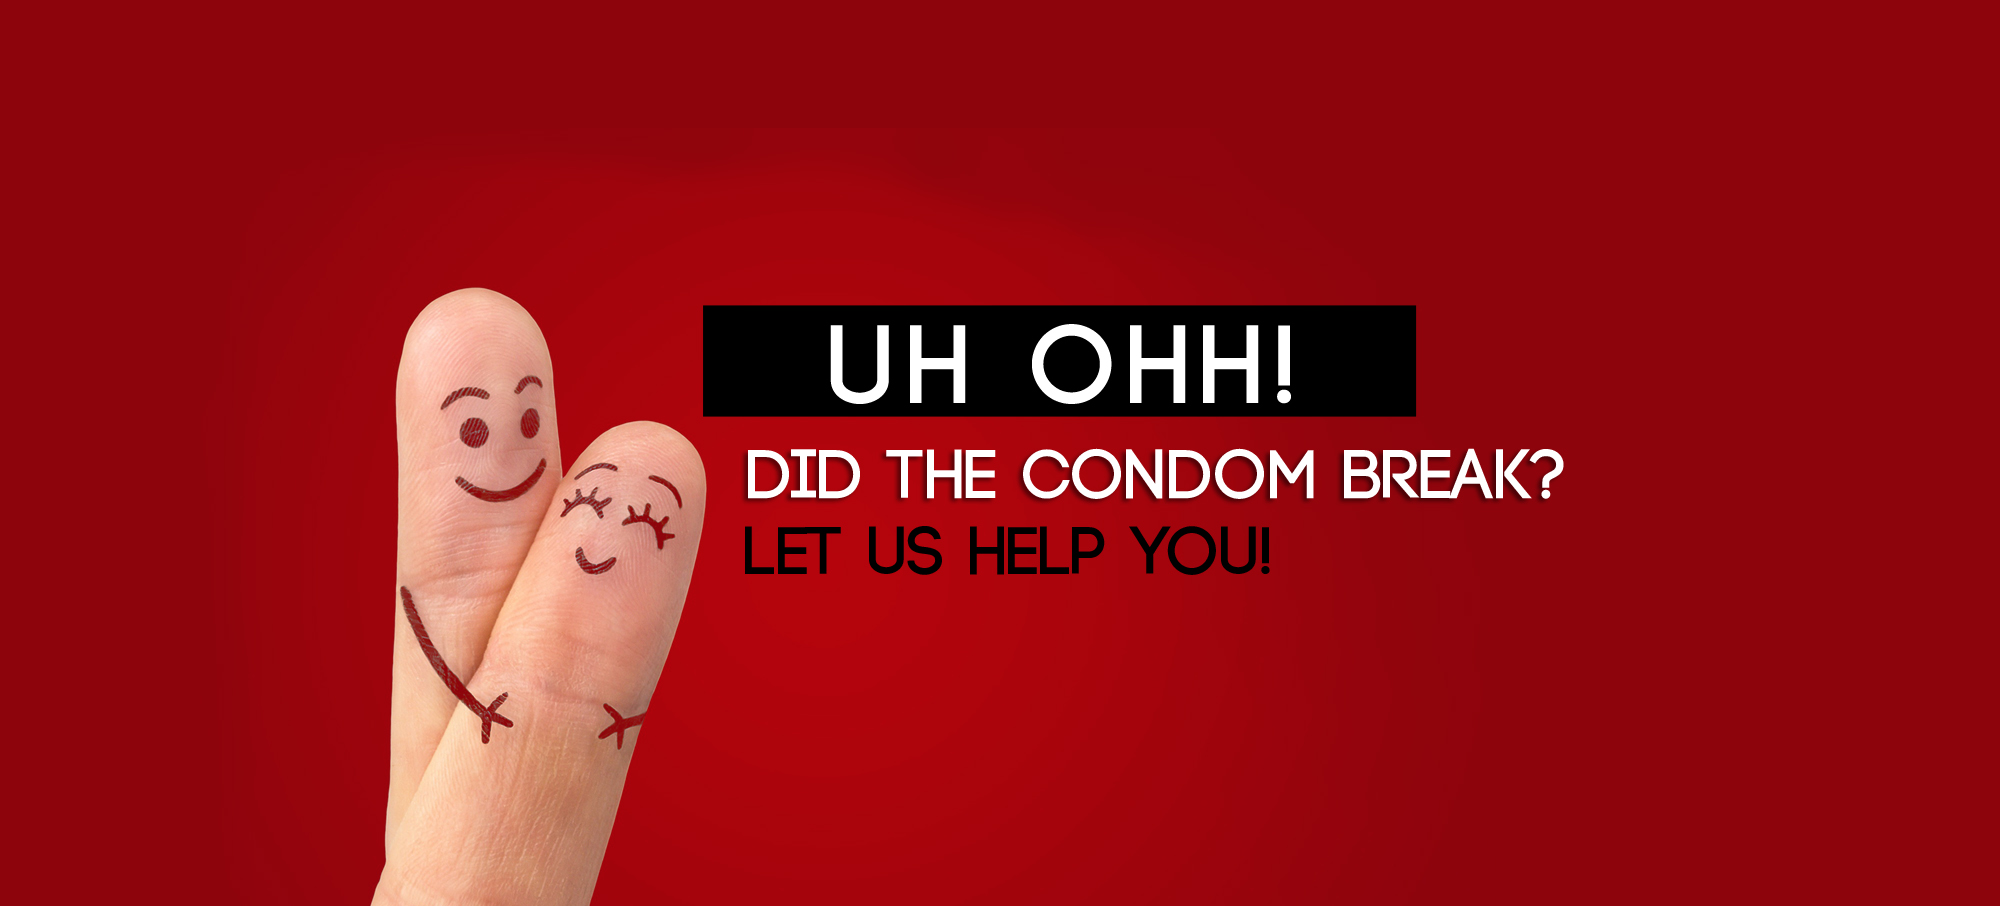 broken condom, plan b, emergency contraception, vagina, sperm, pregnant, pregnancy test